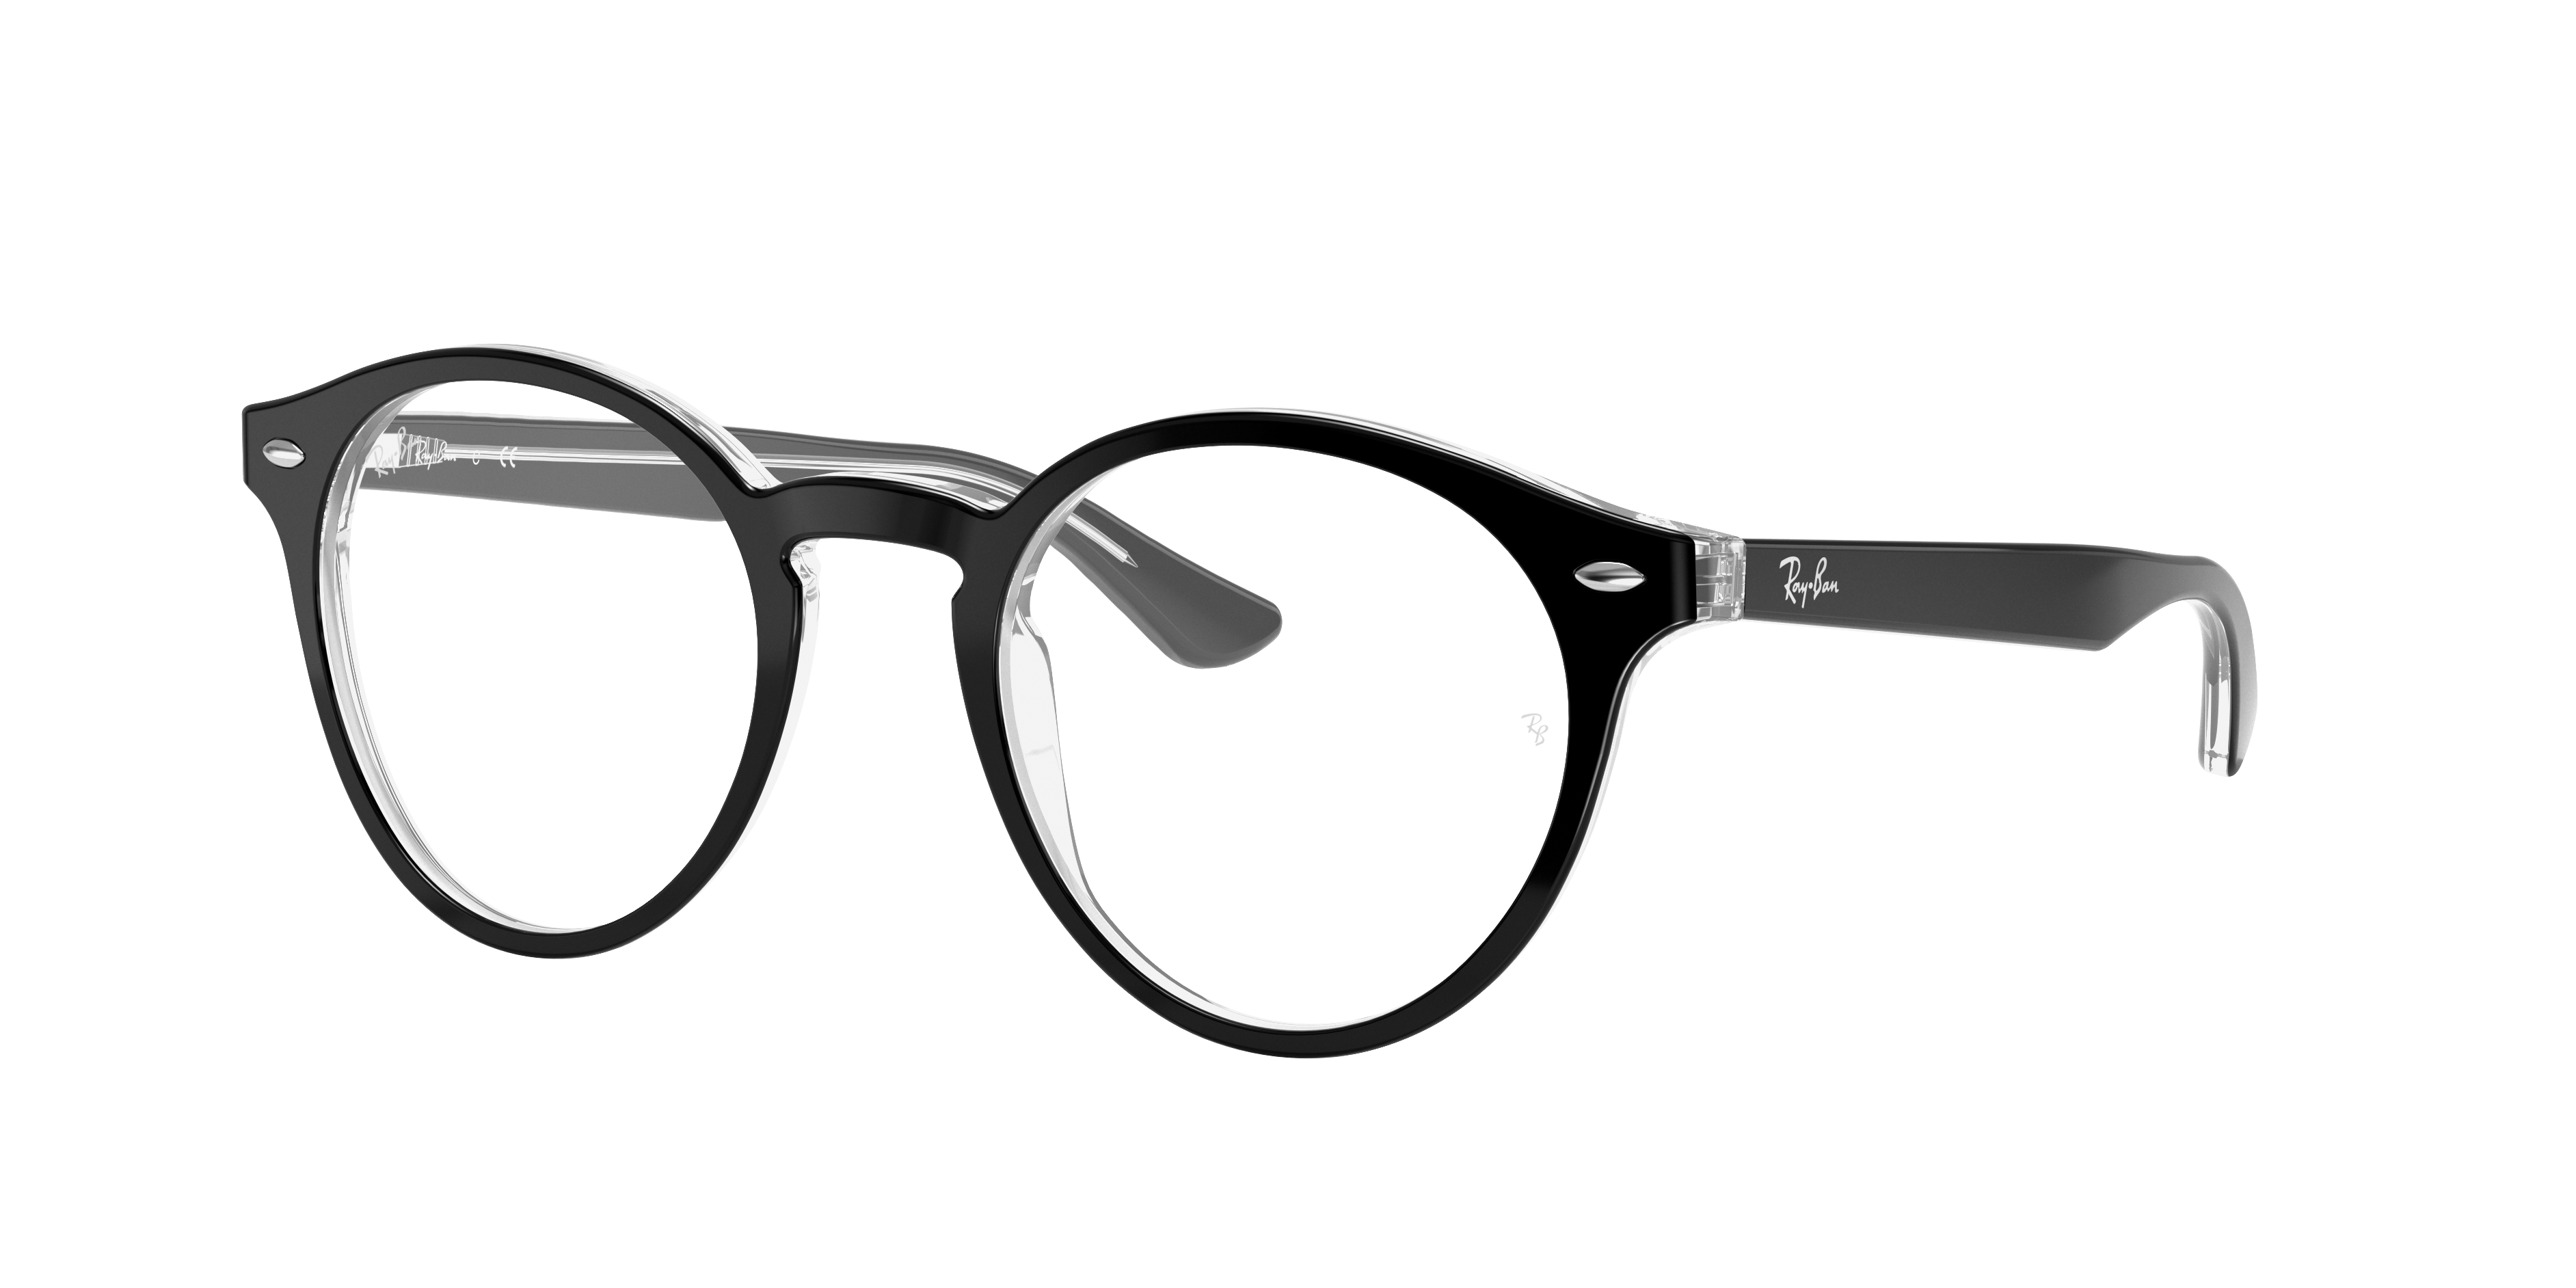 ray ban style eyeglasses